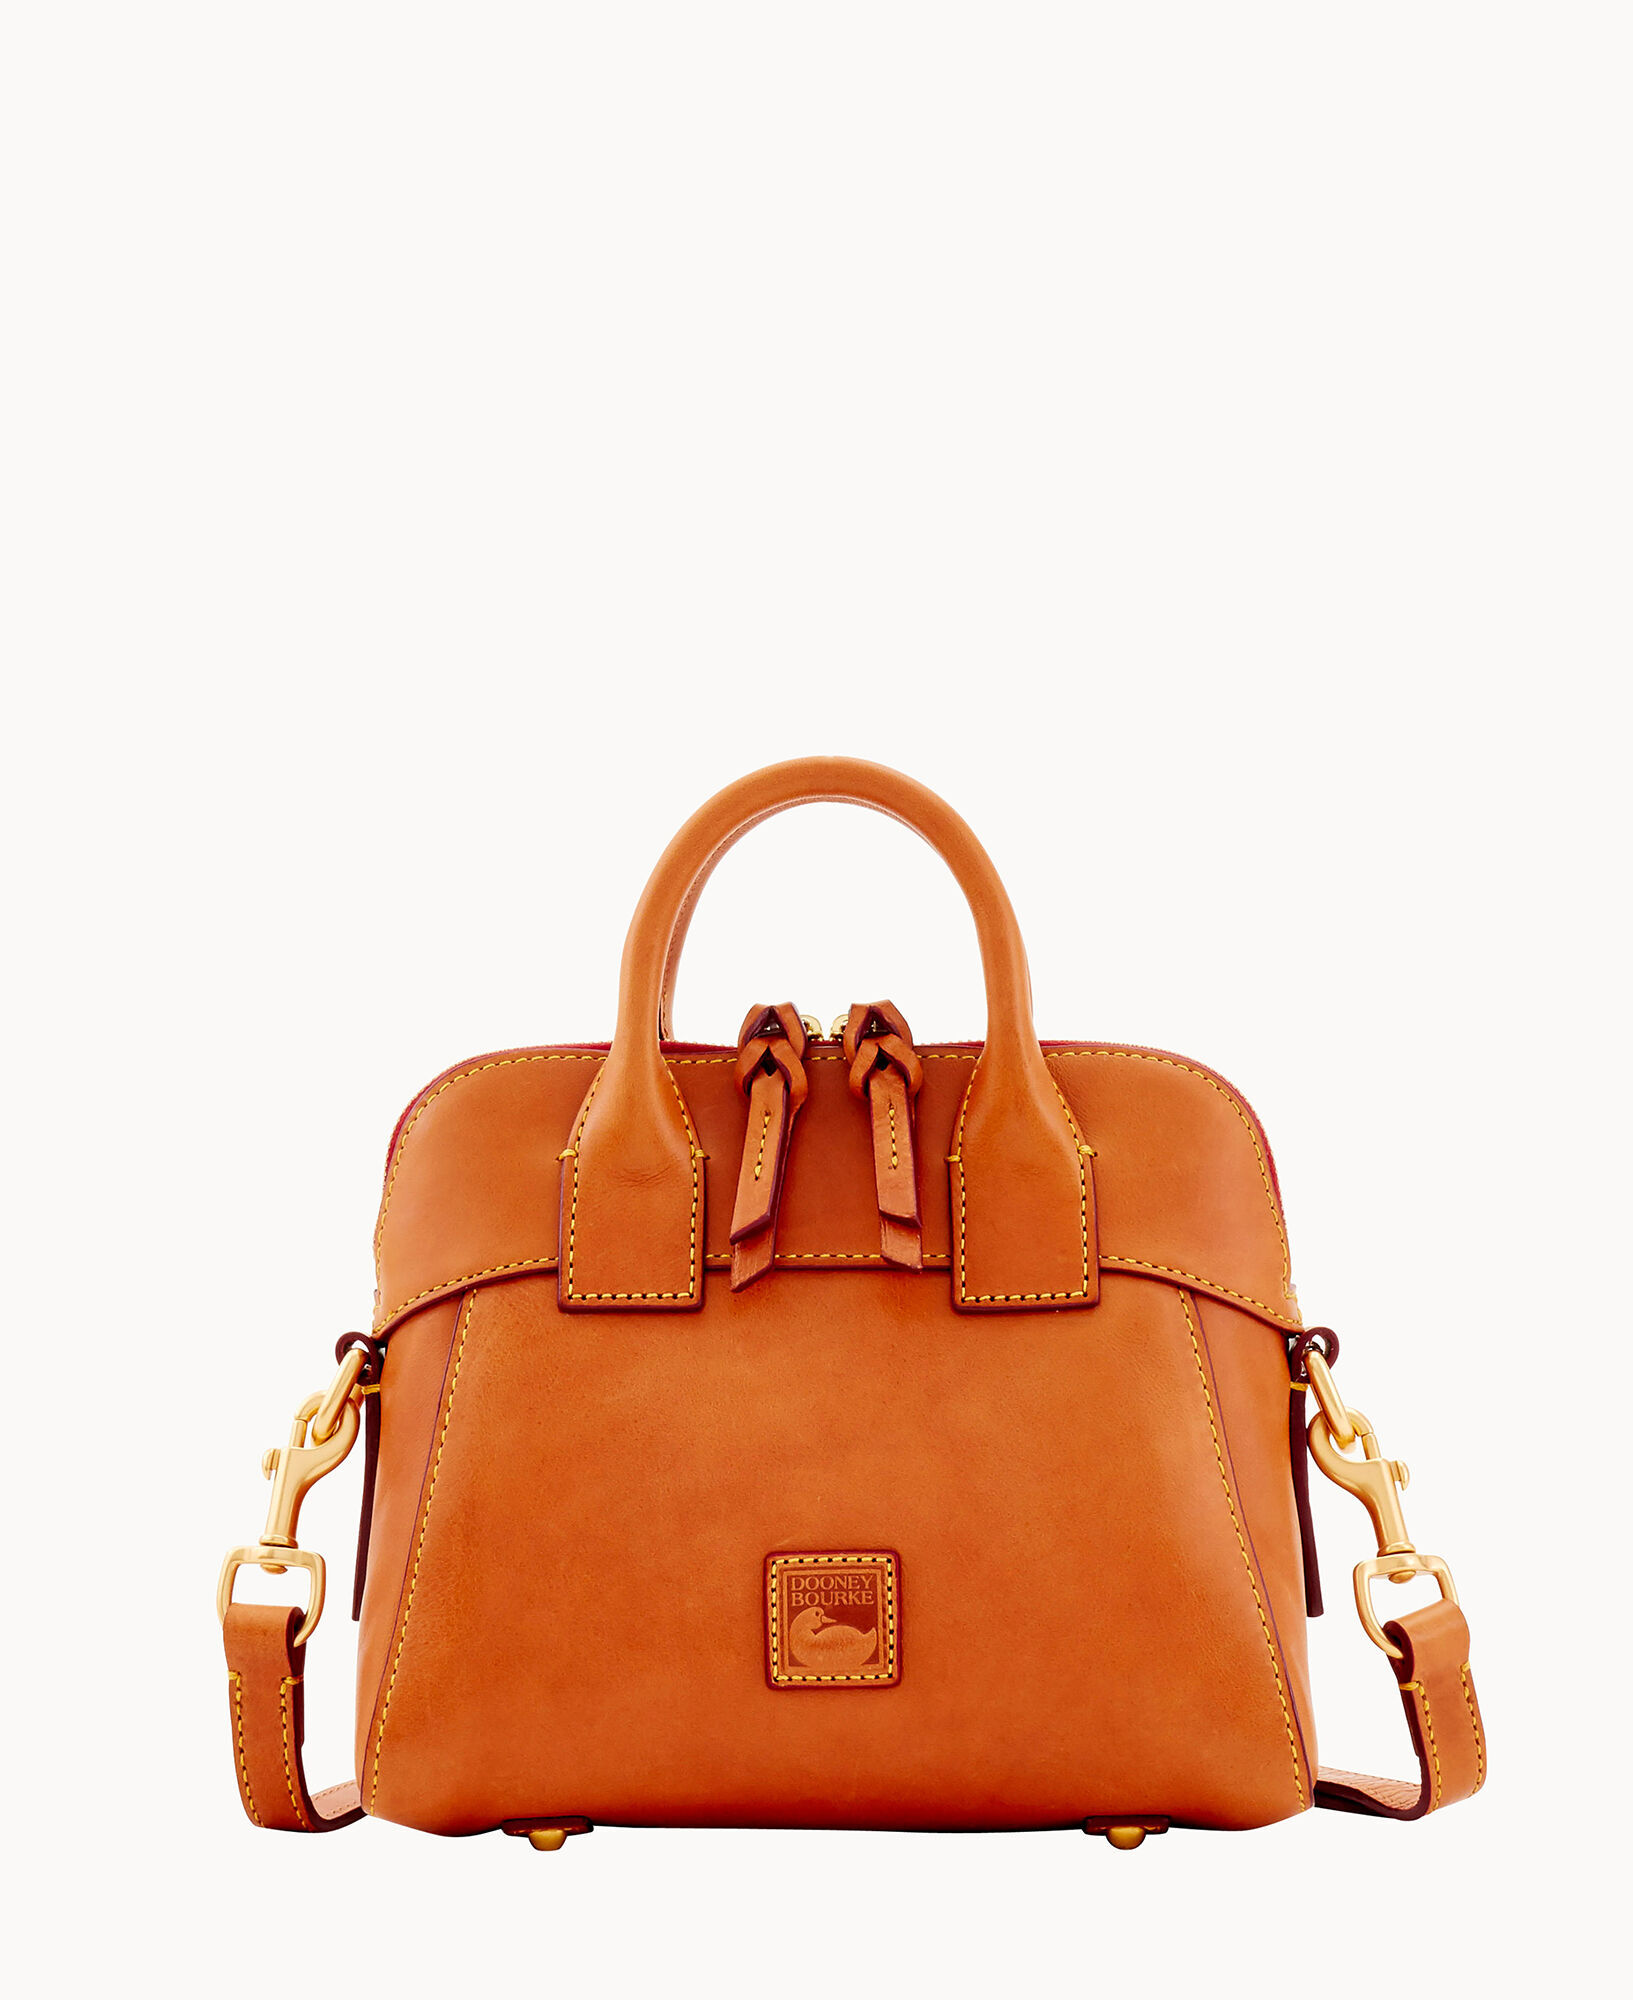 Dooney & Bourke Handbag, Florentine Ridley Crossbody - Chestnut: Handbags